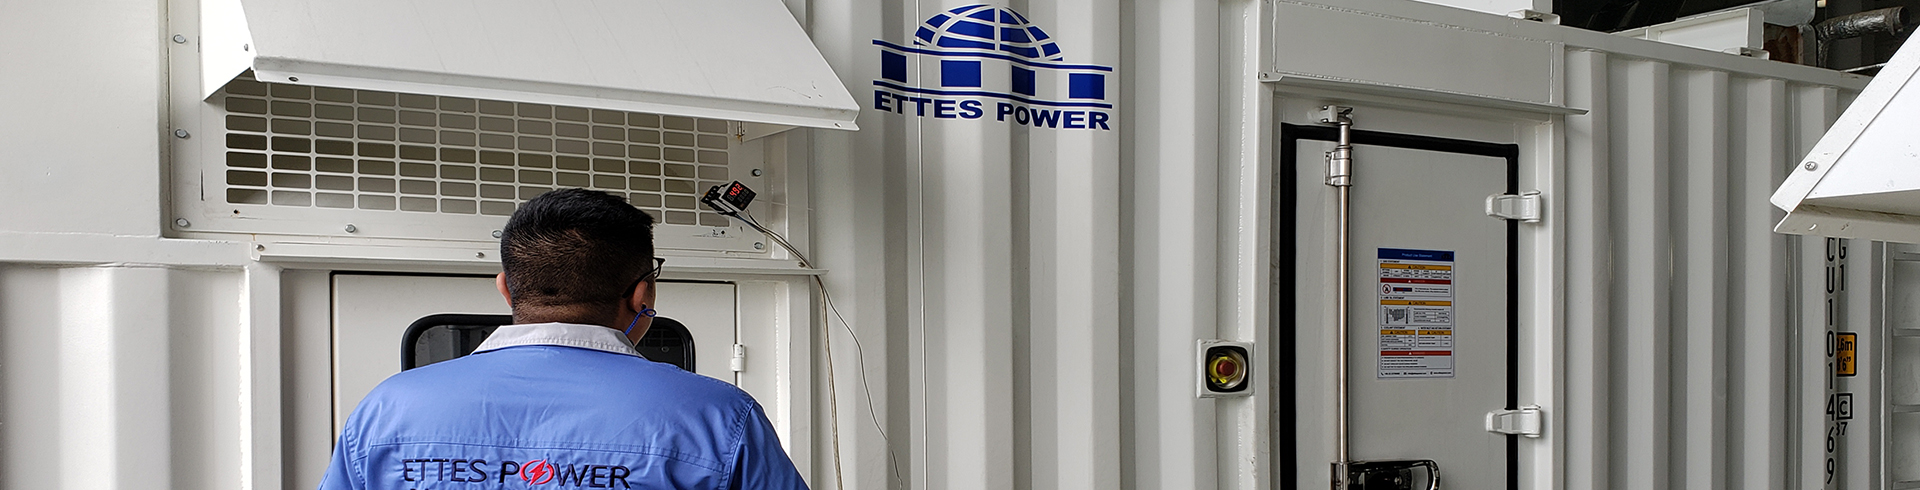 Ettespower manufature producer gas engine generators & CHPs Ettes Power Group Cummins MAN MWM (14)